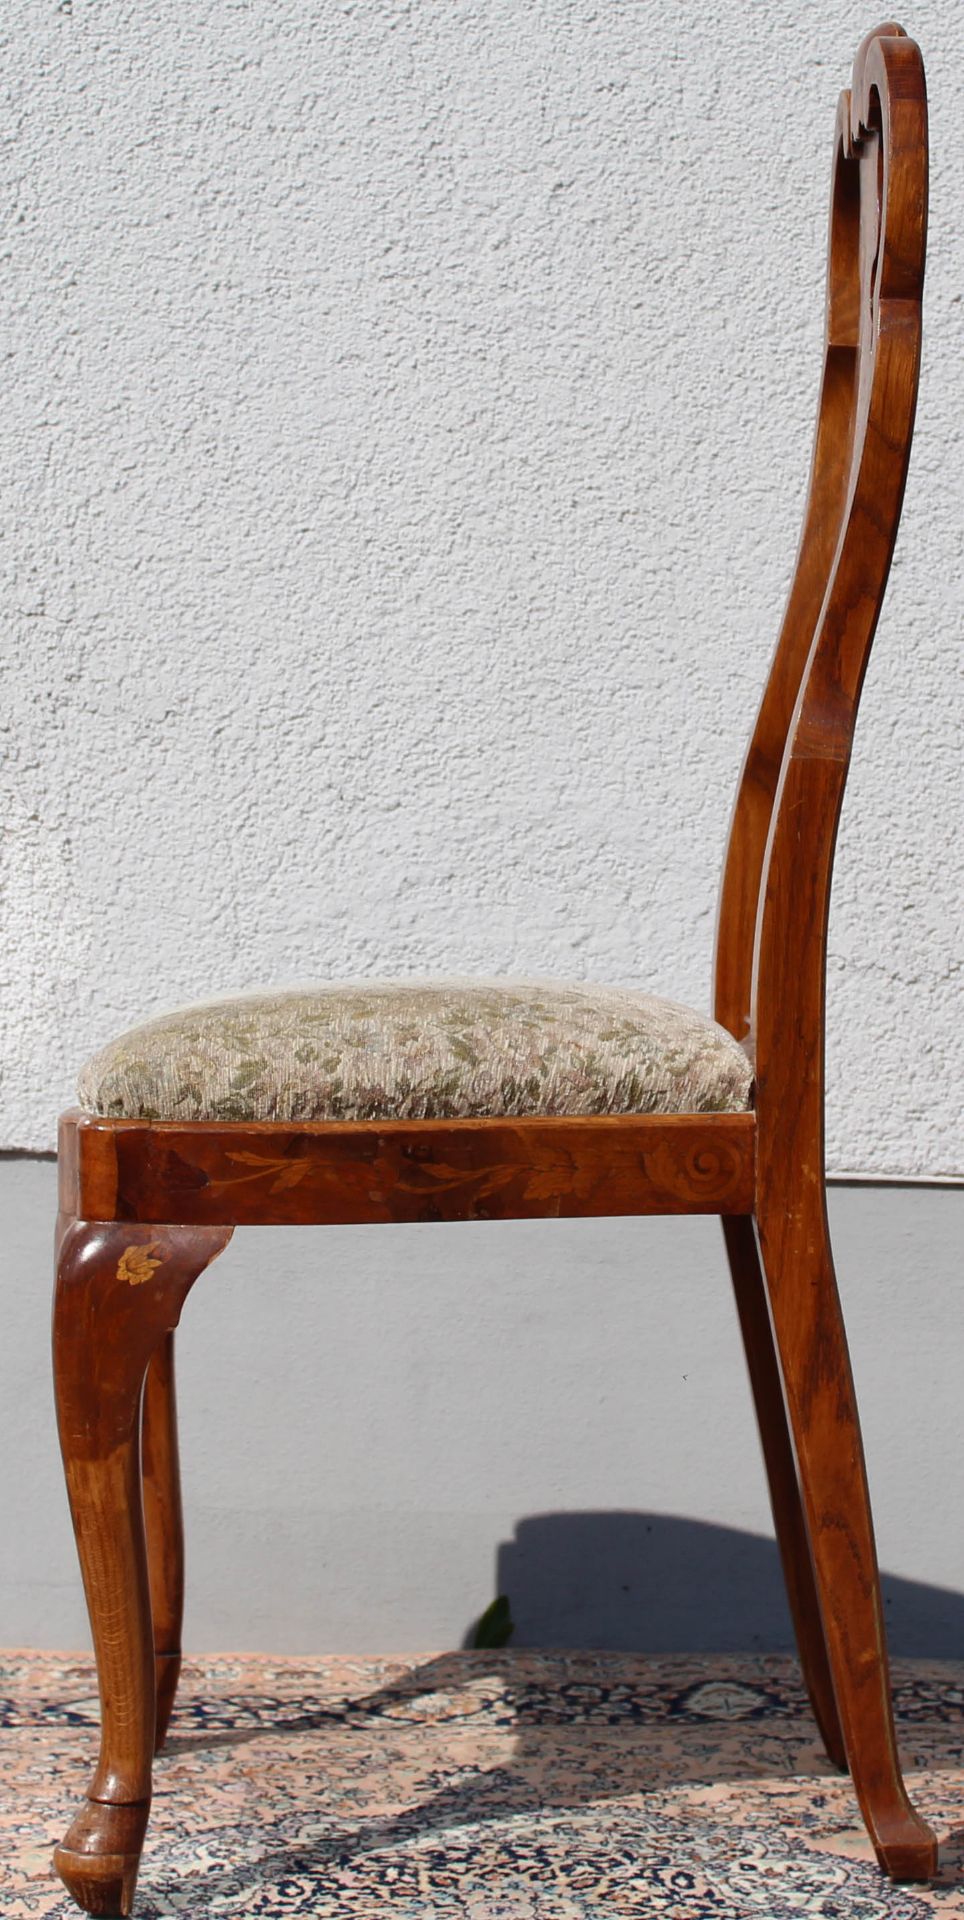 4 Stühle. Ebonisiert. Holland Stil.108(49) cm x 49 cm x 43 cm.4 chairs. Ebonized. Holland style. - Image 2 of 6